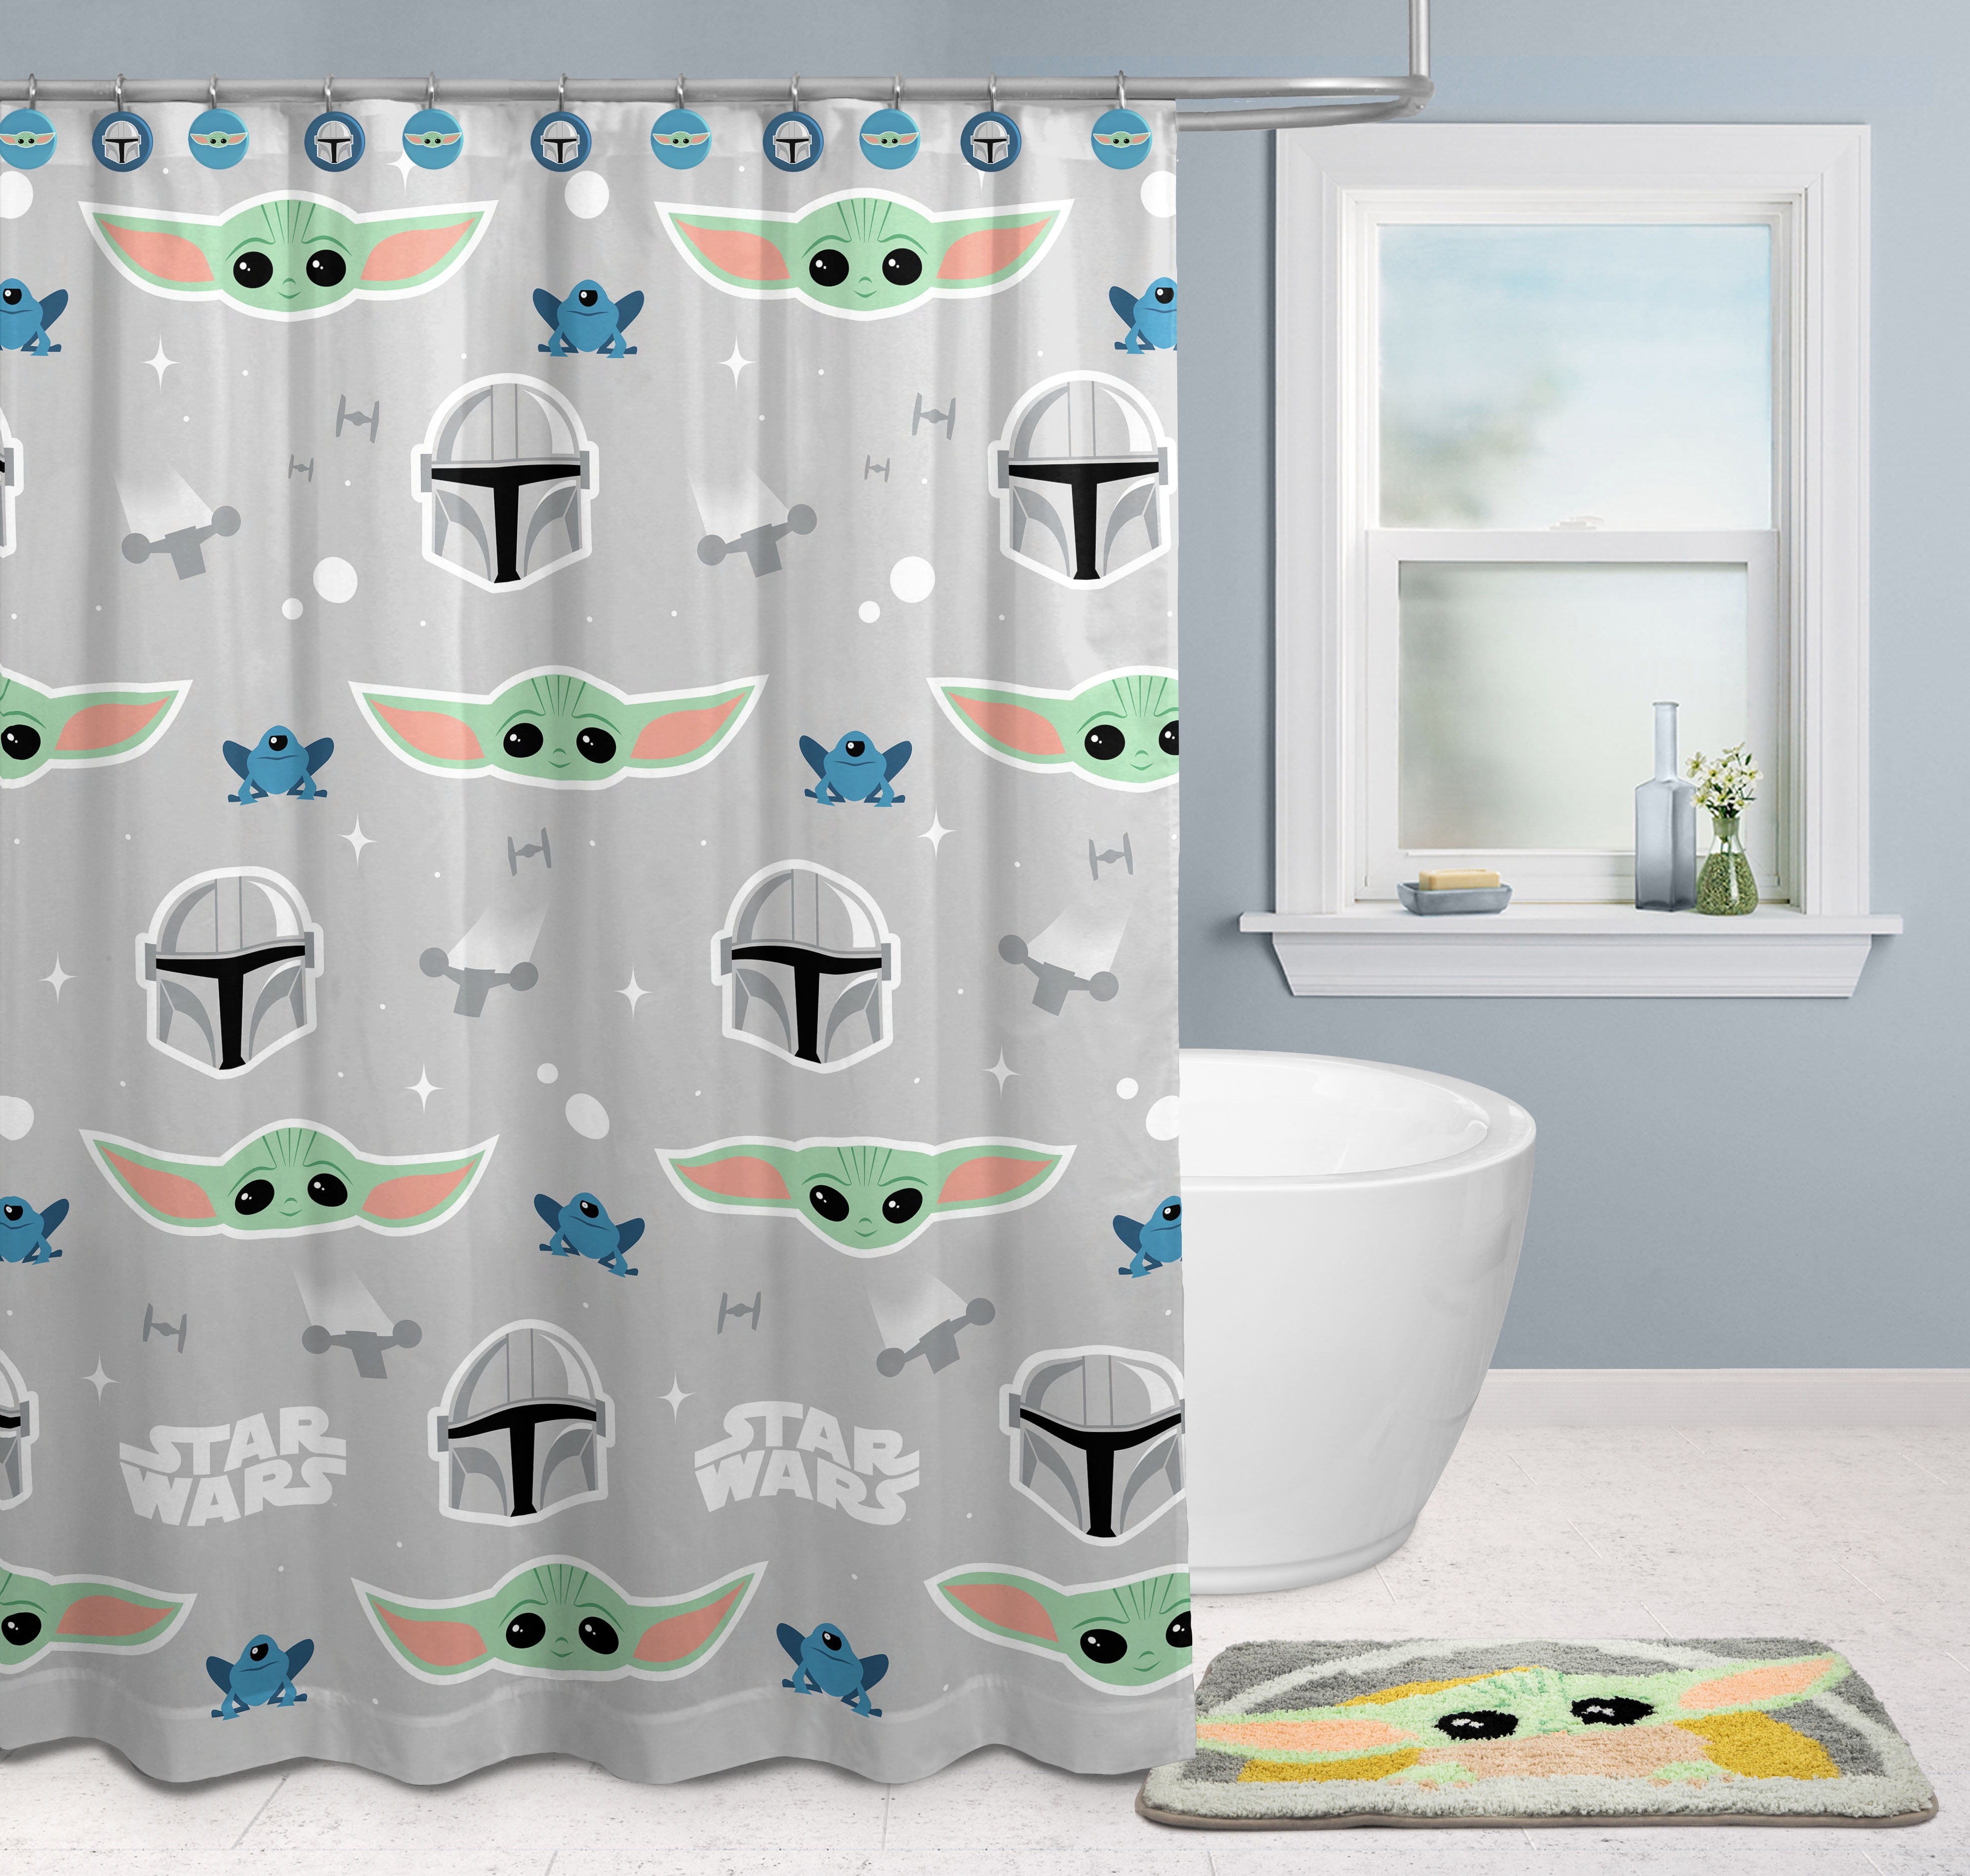 Star Wars Mandalorian Bathroom Sets 4PCS Shower Curtain Toilet Lid